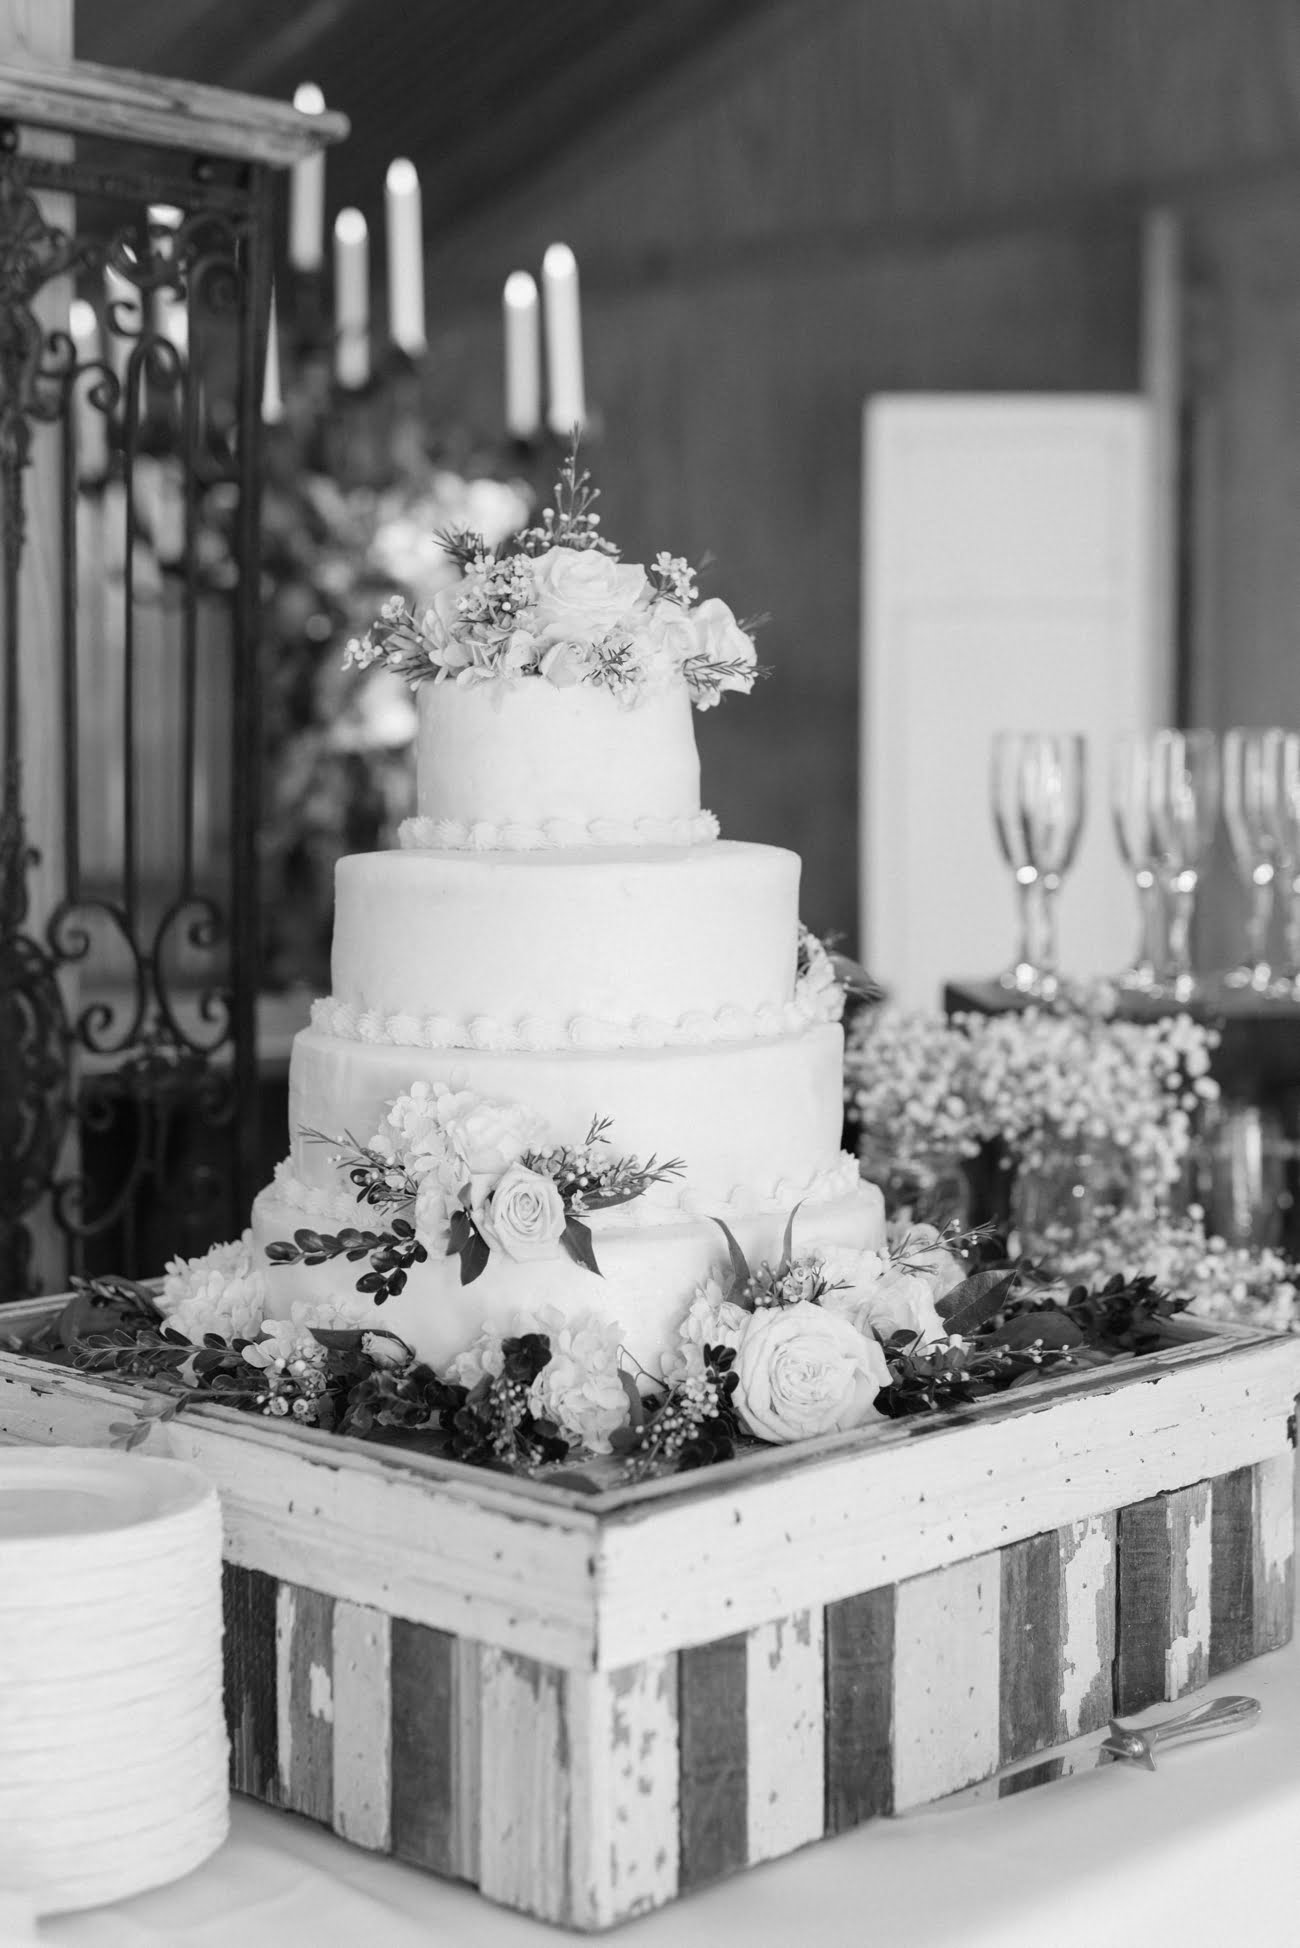 Wedding cake in black and white photo